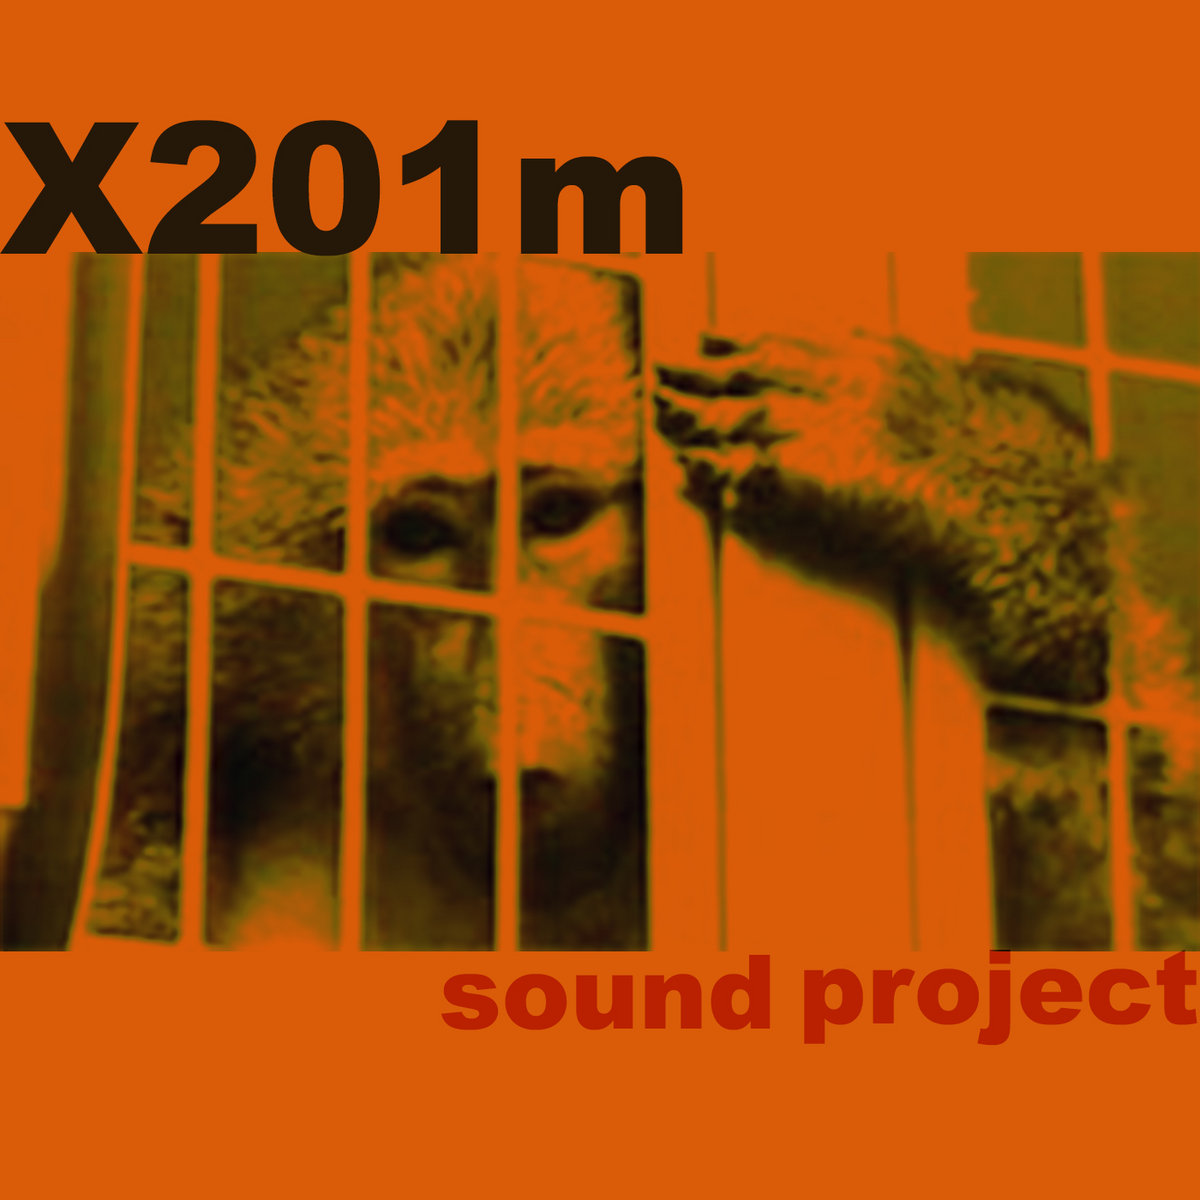 X201m Sound Project - Mikael Madsen